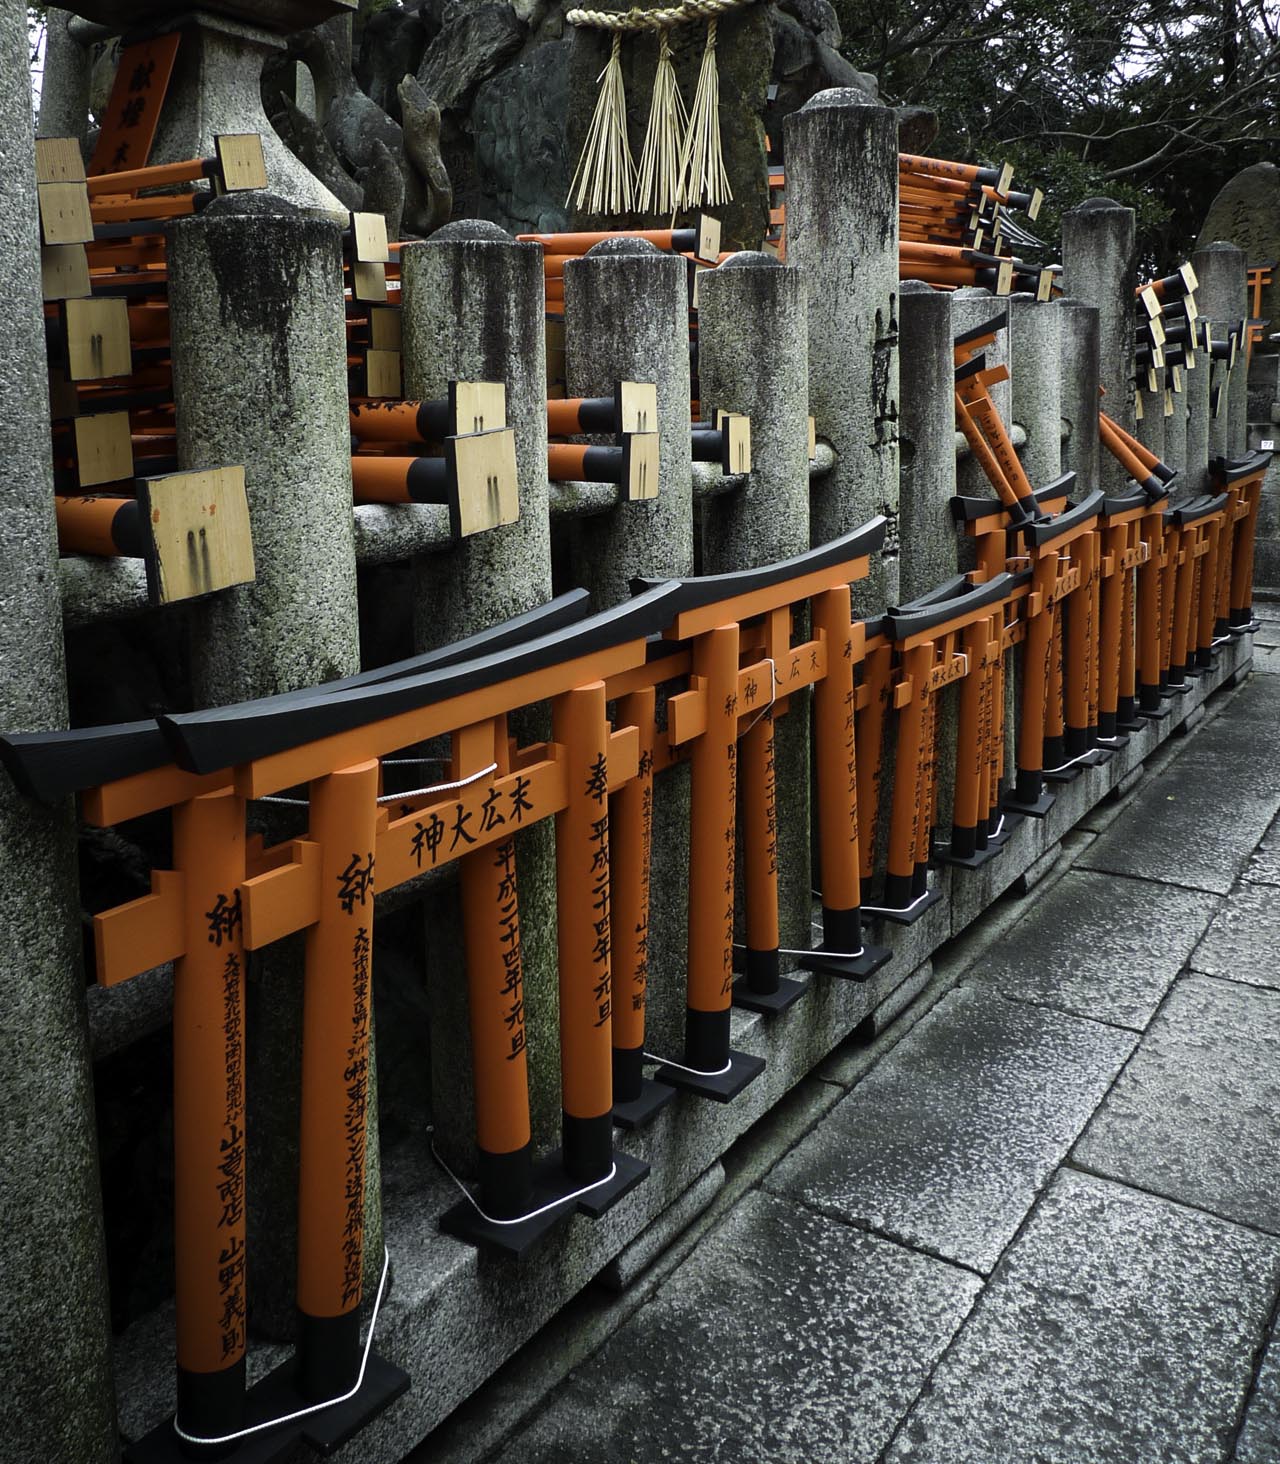 Kyoto: Fushimi Inari Shrine and the 5,000 Vermilion Gates